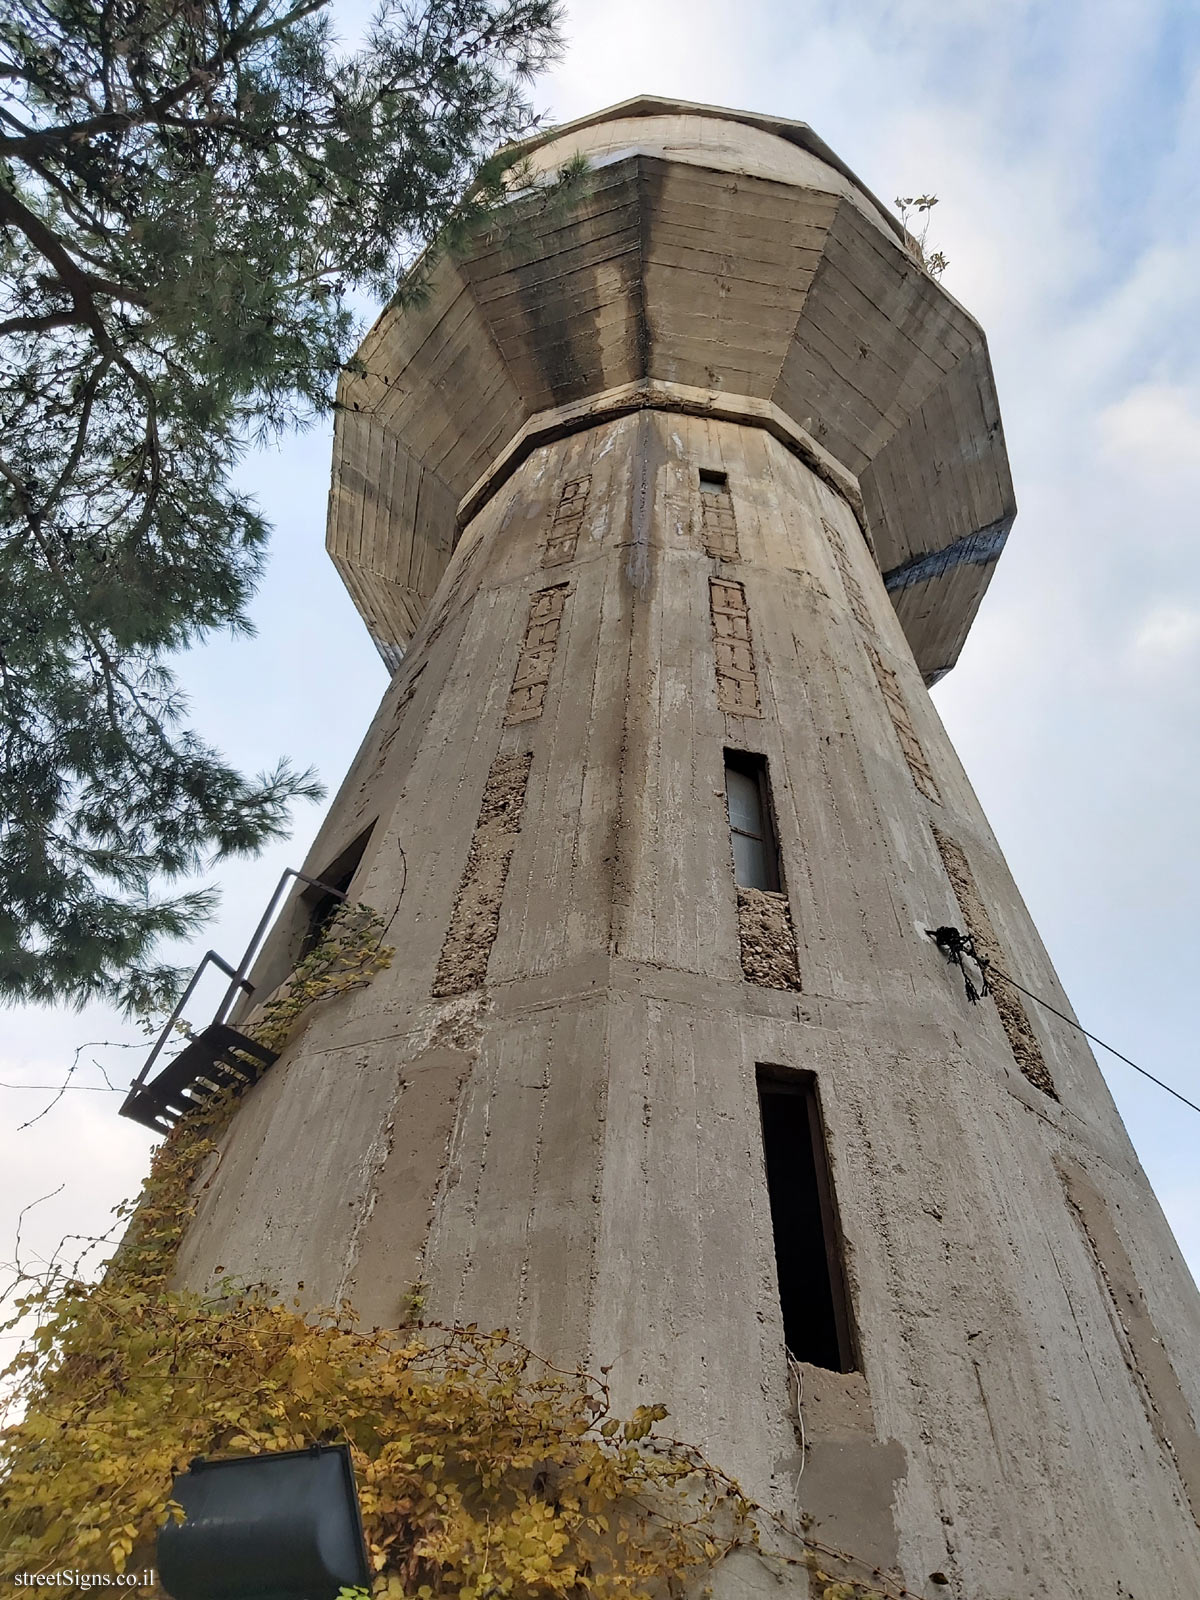 Heritage Sites in Israel - Water tower - HaMigdal St 33, Giv’atayim, Israel